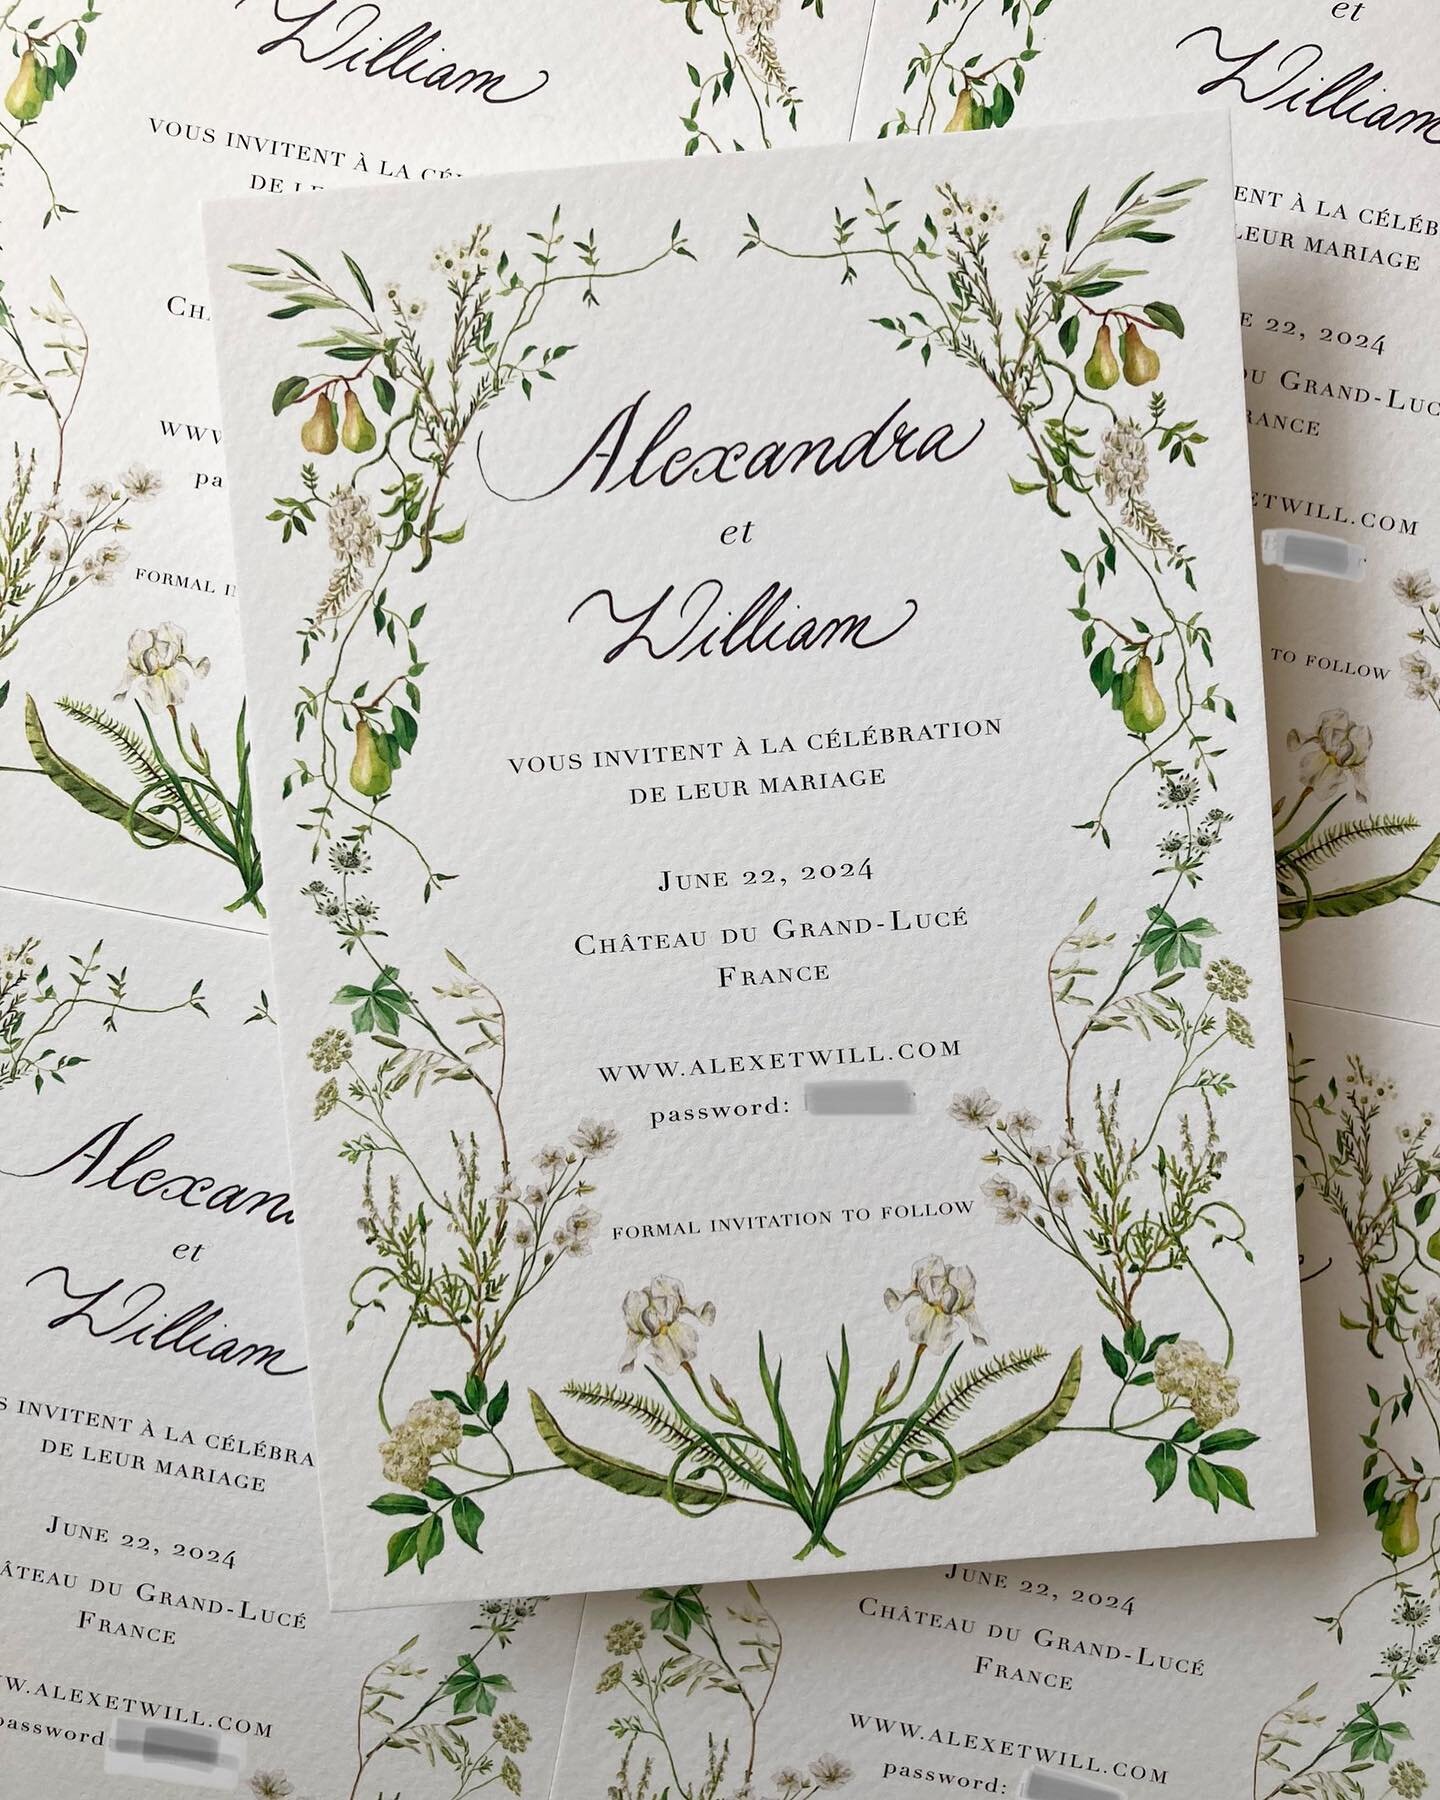 Everything looks better in French! 

#savethedate #chateauwedding #invitation #weddinginvitations #watercolorinvitation